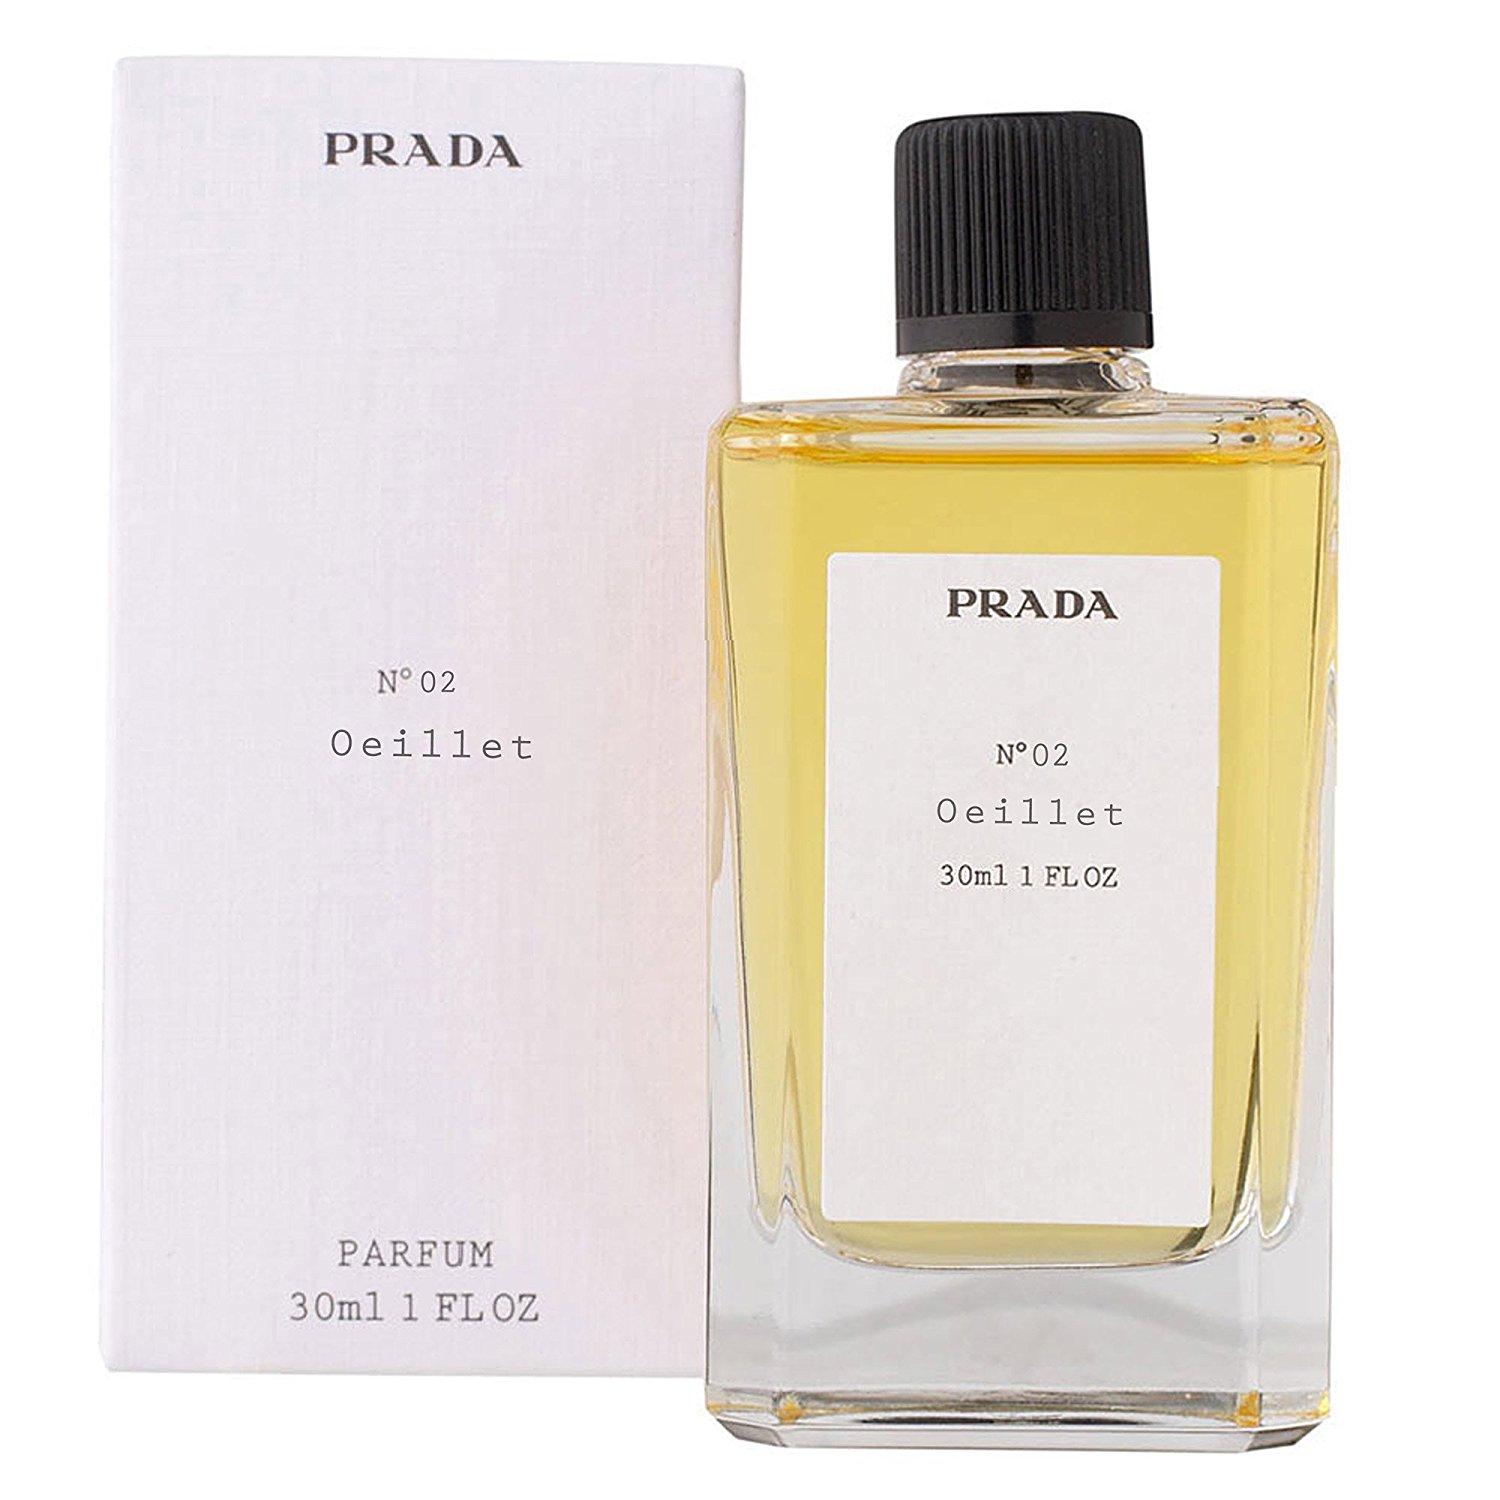 Prada Exclusive Collection No.2 "Oeillet" 30ml, Parfum (W)